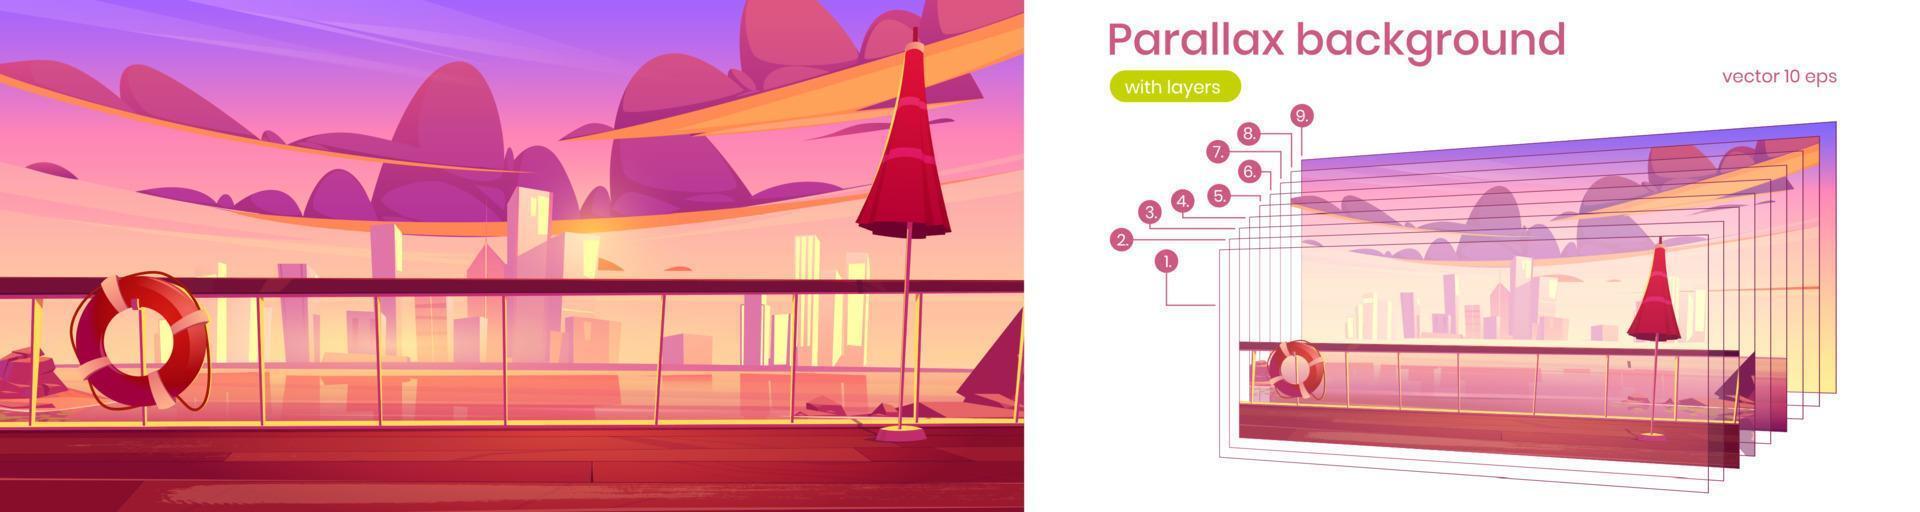 Parallax background sunset city form ship deck vector